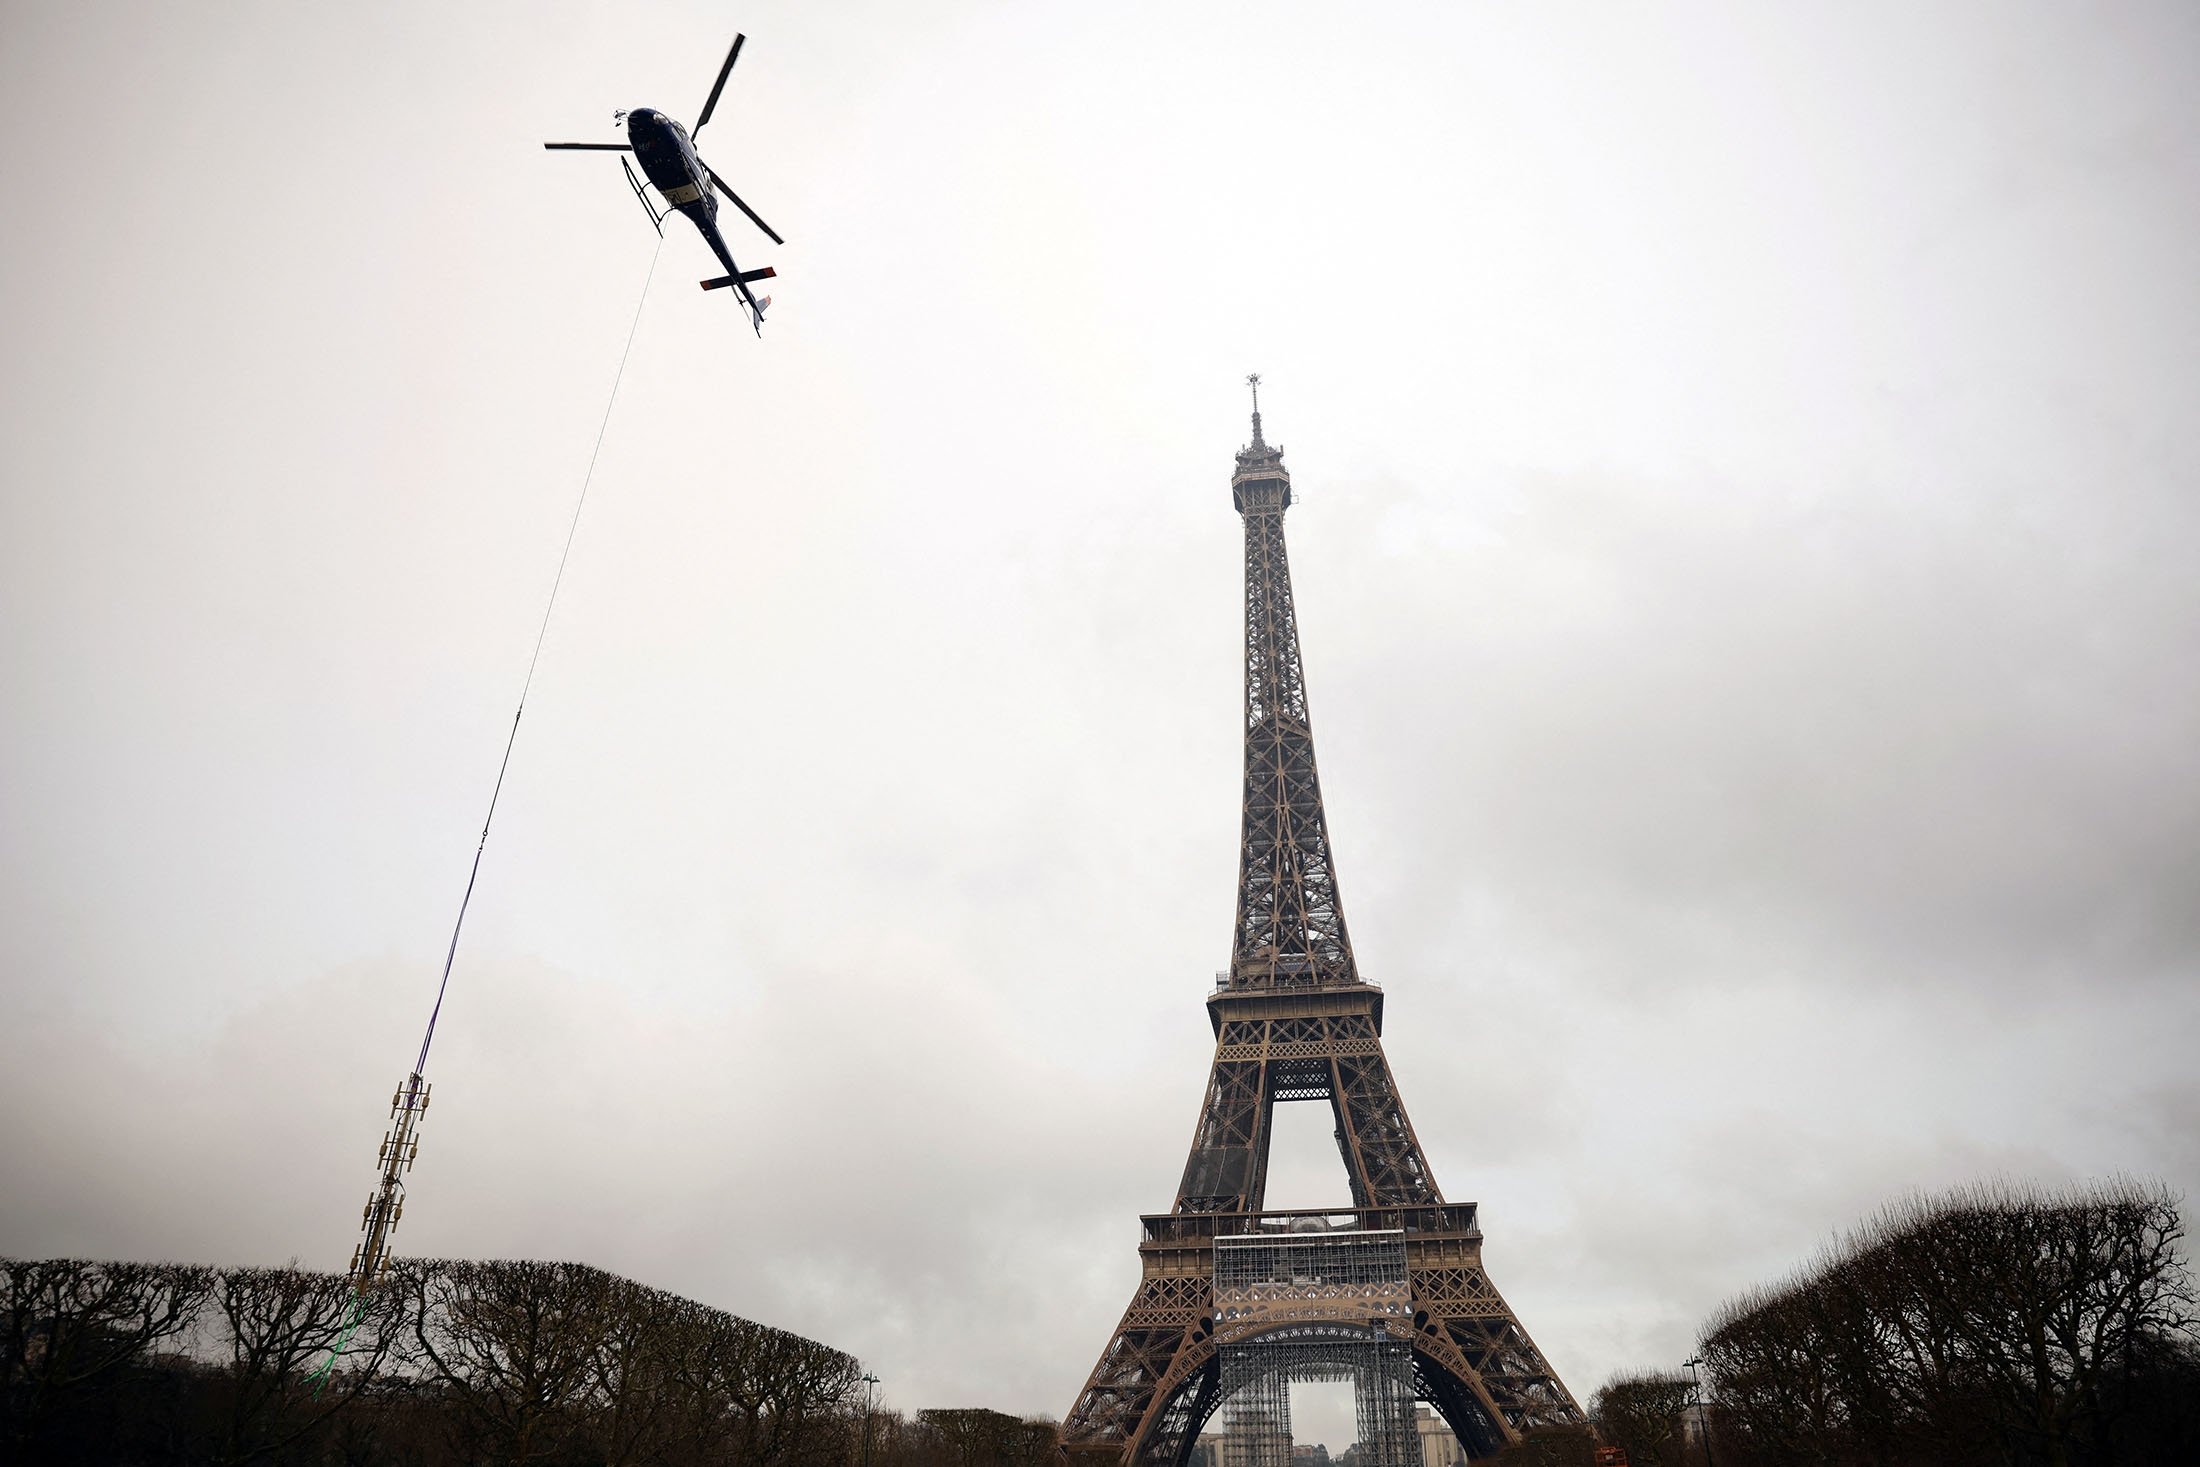 Sebuah helikopter lepas landas di dekat Menara Eiffel untuk memasang antena transmisi telekomunikasi baru TDF (TeleDiffusion de France) di atasnya, di Paris, Prancis, 15 Maret 2022. (Foto Reuters)